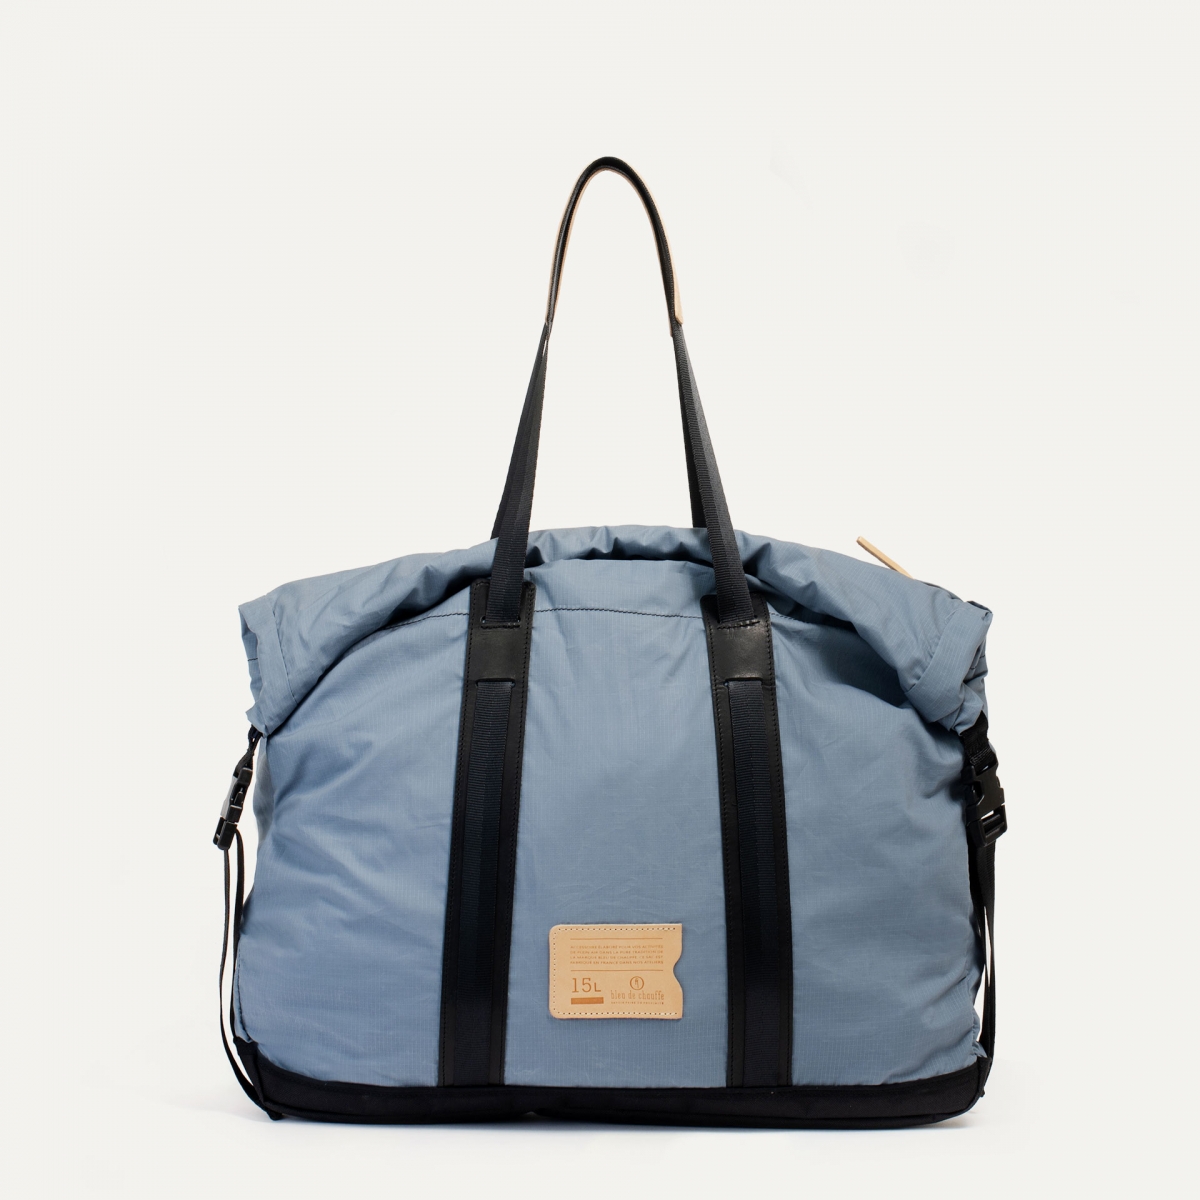 15L Barda Tote bag - blue grey (image n°1)